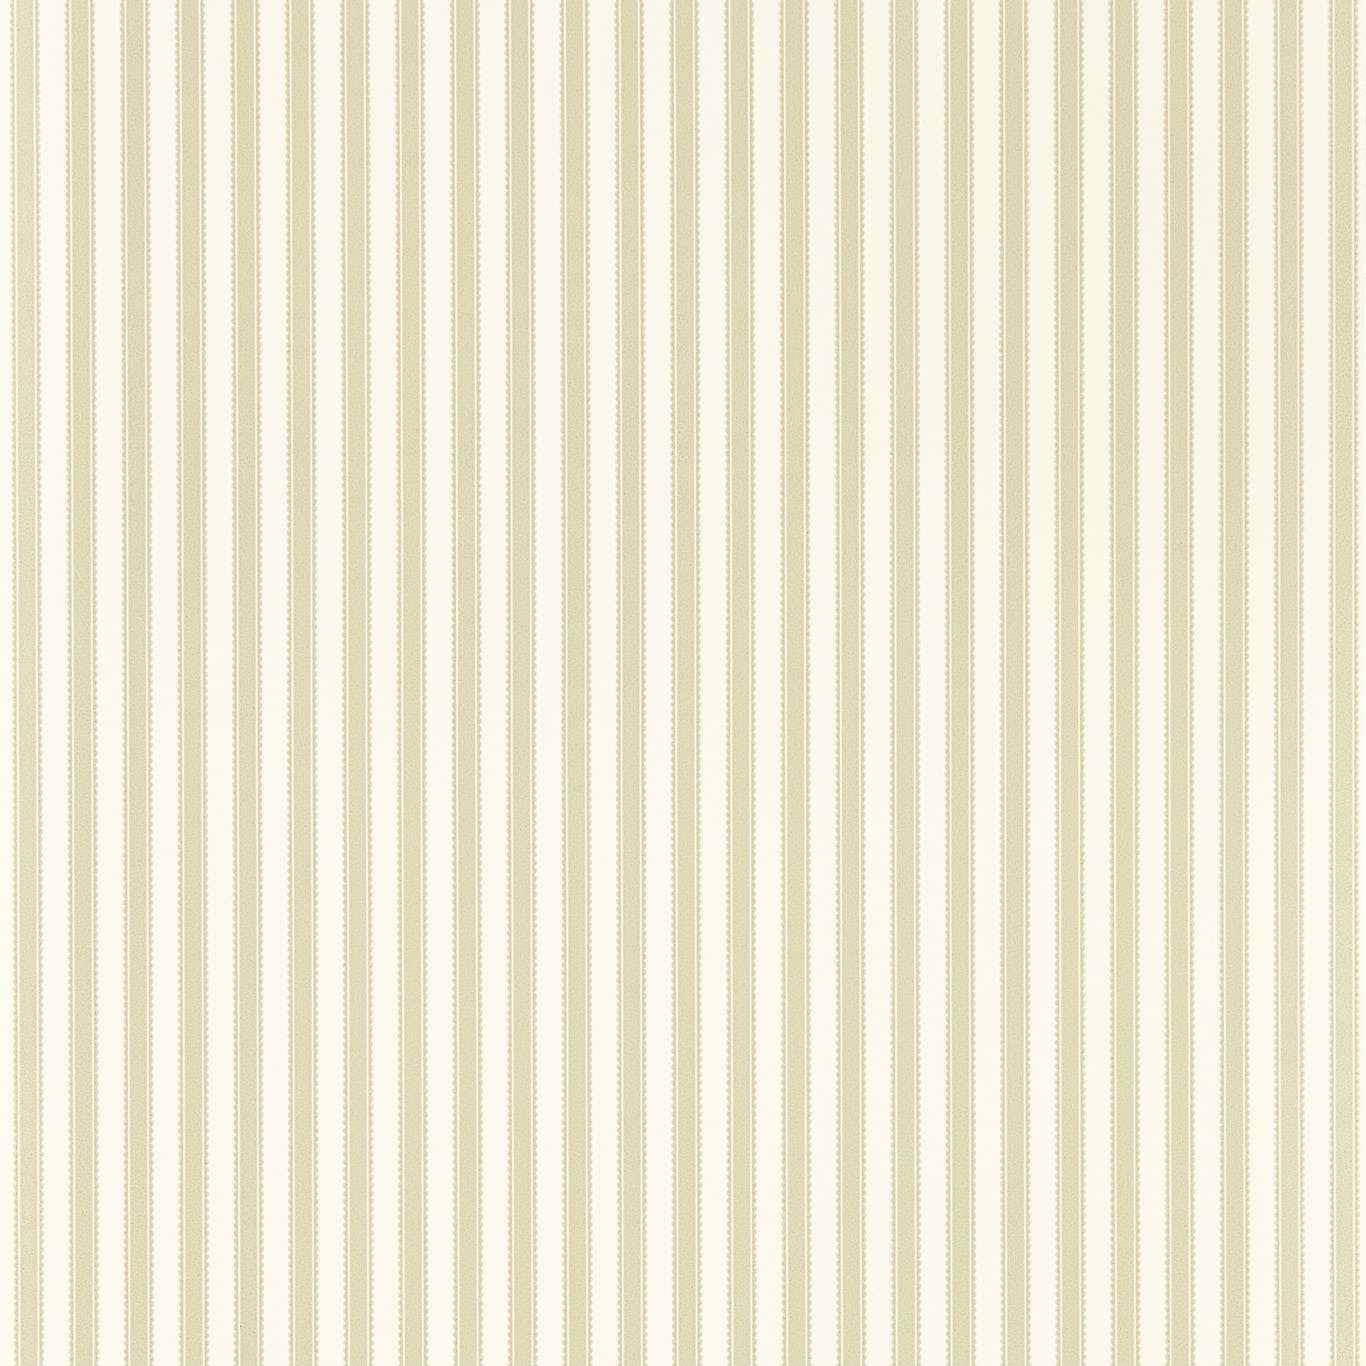 Pinetum Stripe Flax Wallpaper DABW217252 by Sanderson